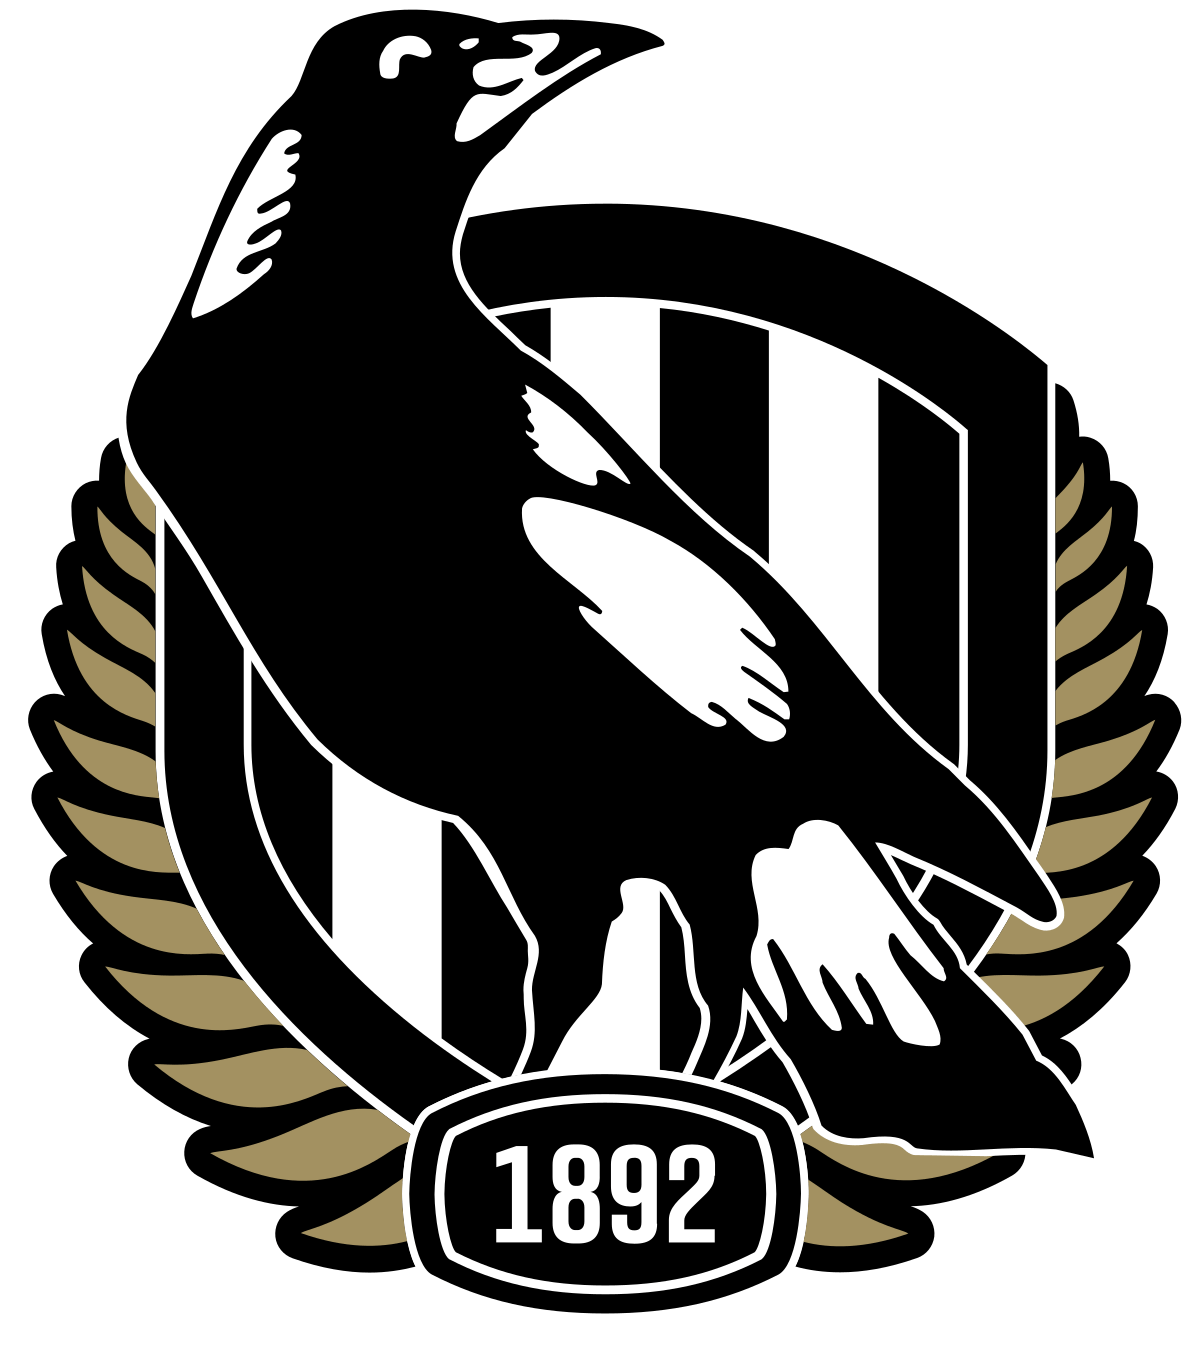 Black and White Football Team Logo - Collingwood Football Club